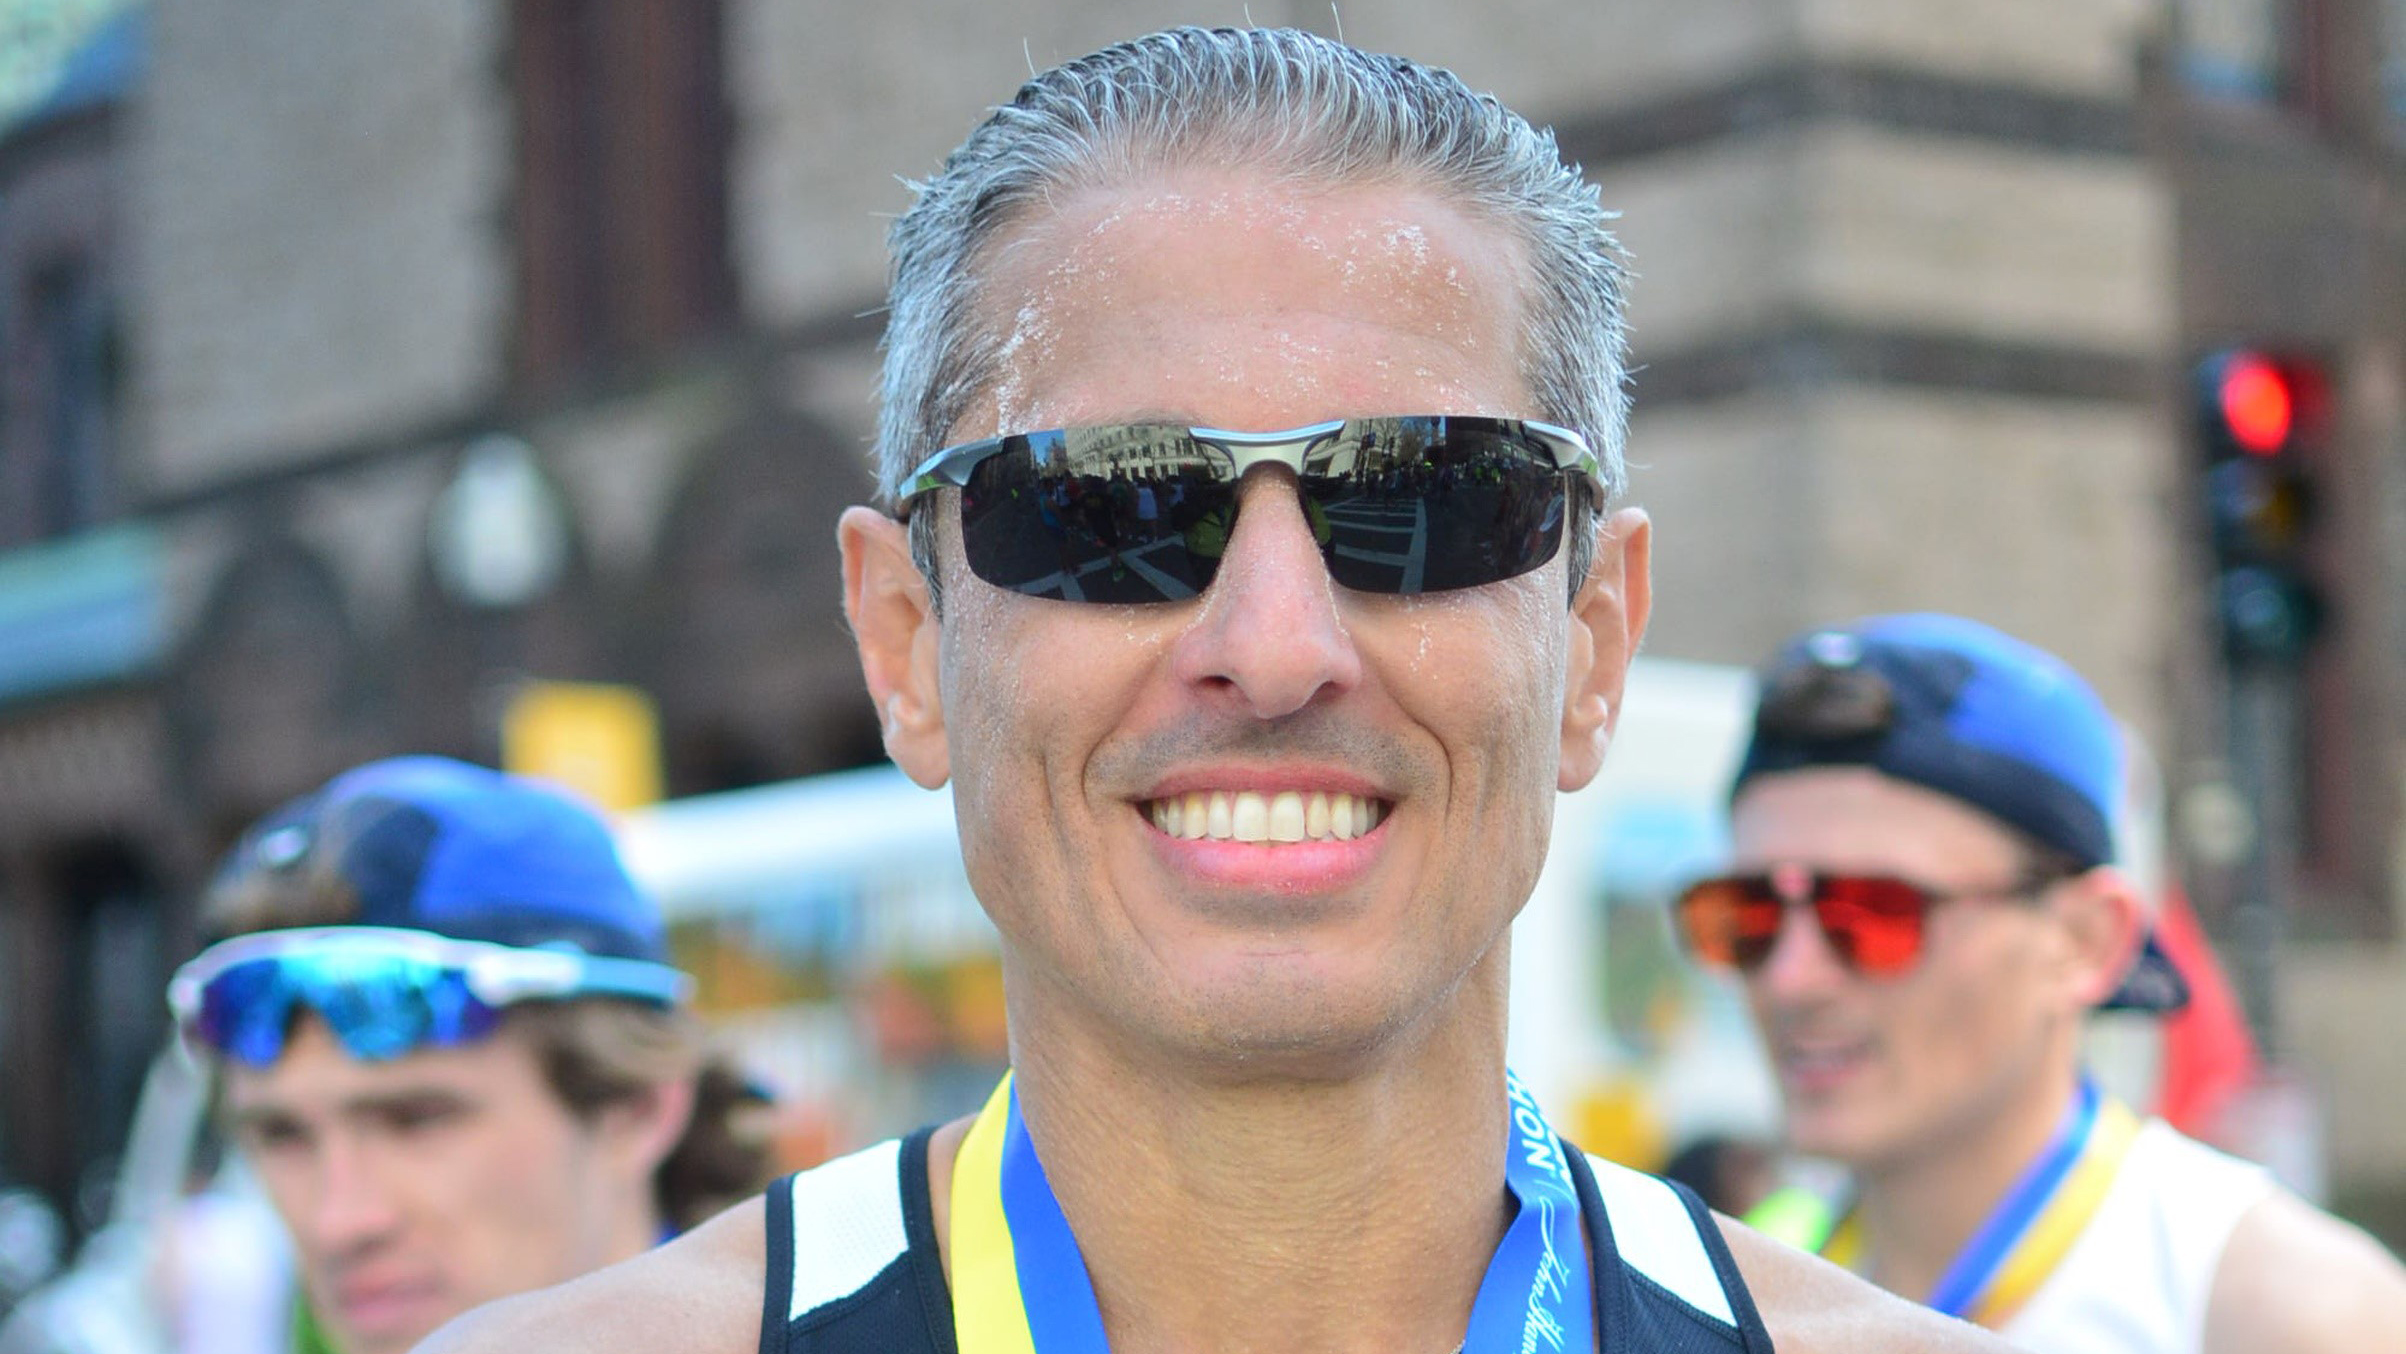 Dr. Kurtom is photographed following running in the Boston Marathon.